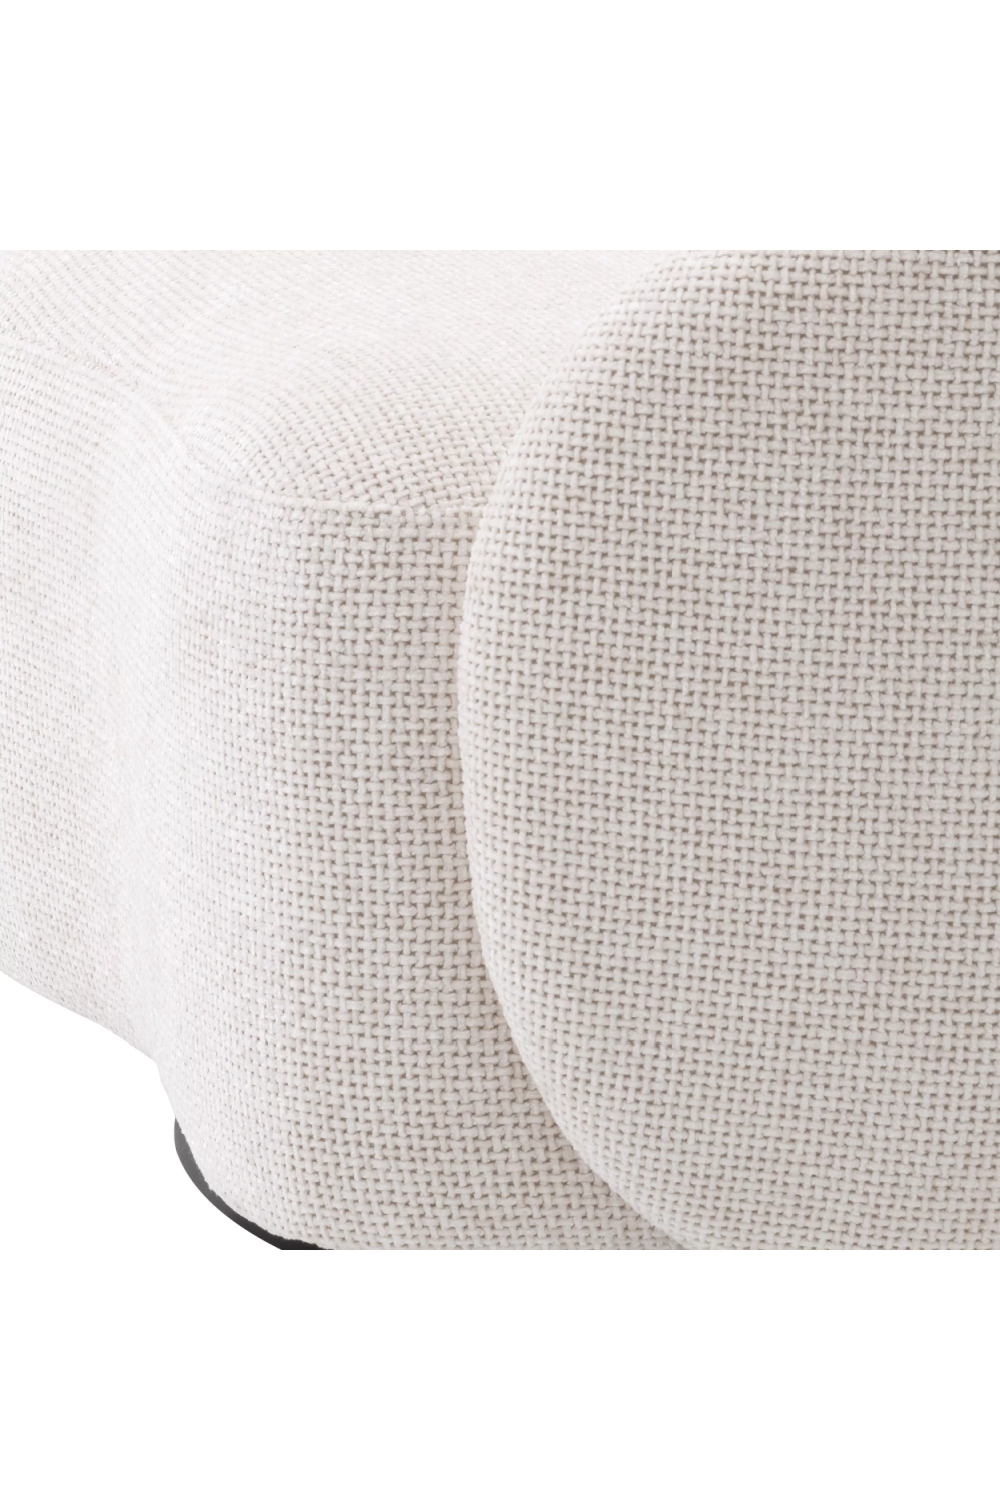 Off-White Swivel Tub Chair | Eichholtz Amore | Oroa.com